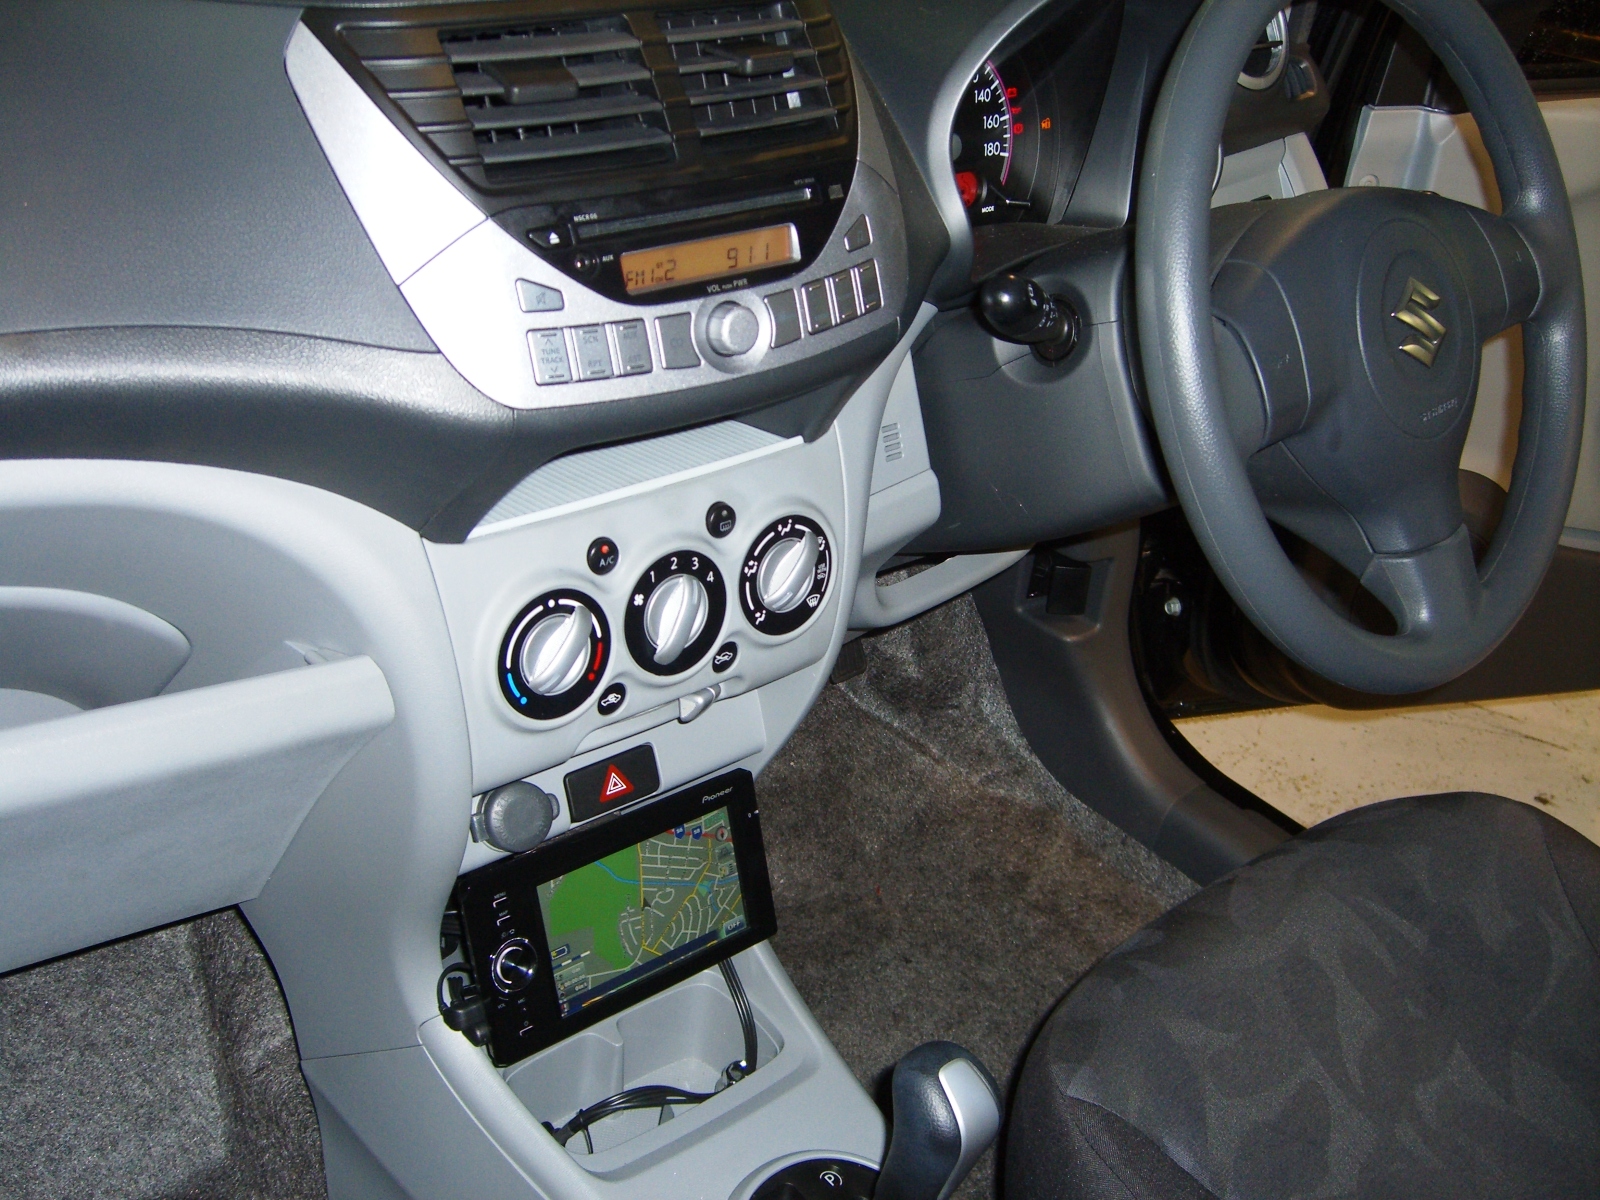 Suzuki Alto 2010 Gps Navigation and speaker upgrade